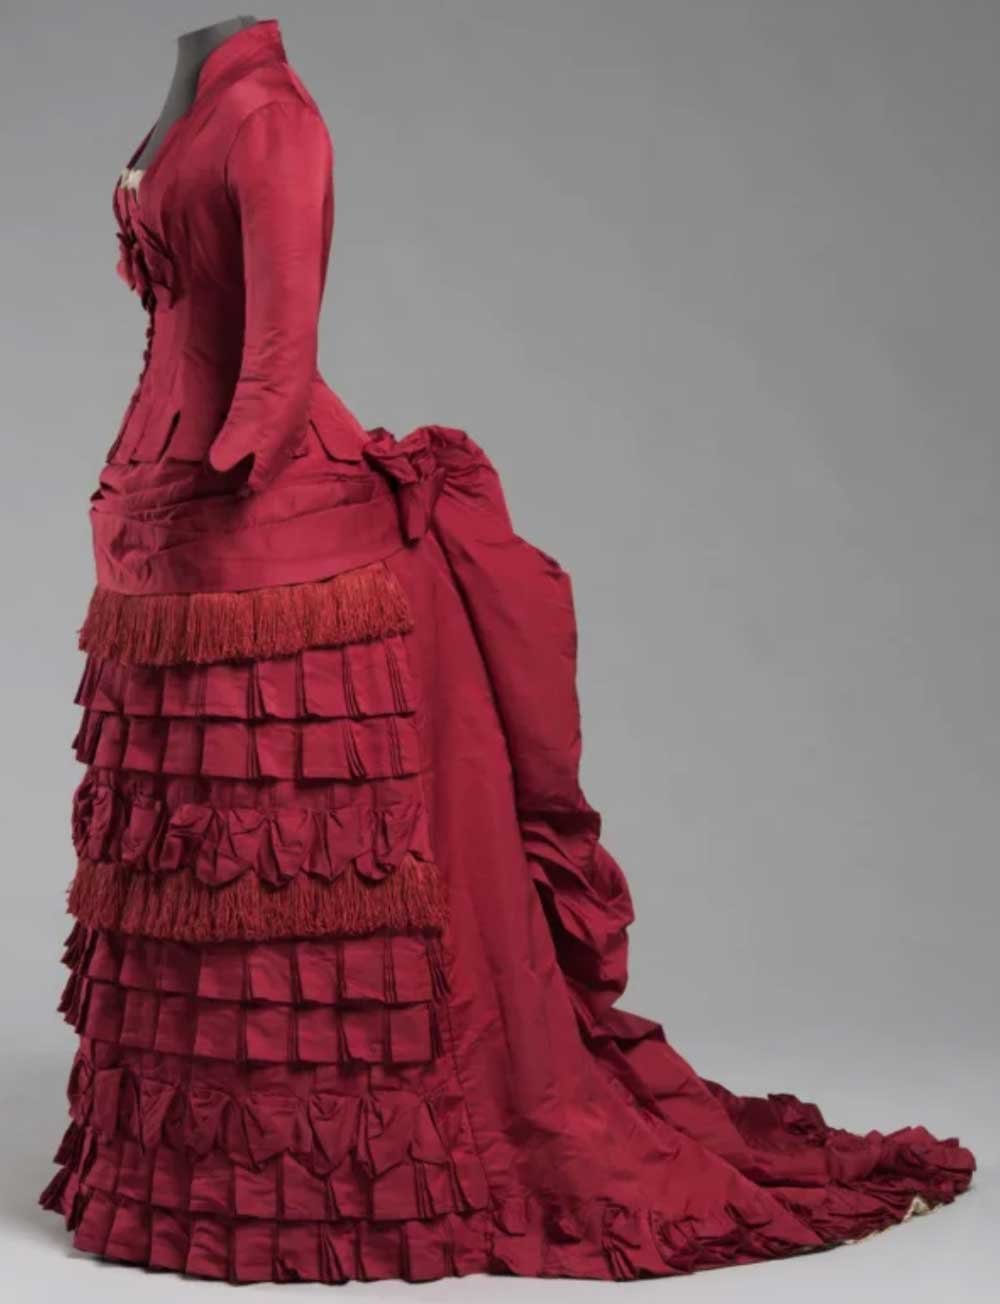 Victorian-passementerie-hand-woven-fringes-trims-tassels-costume-history-elizabeth-ashdown-endangered-craft.jpg